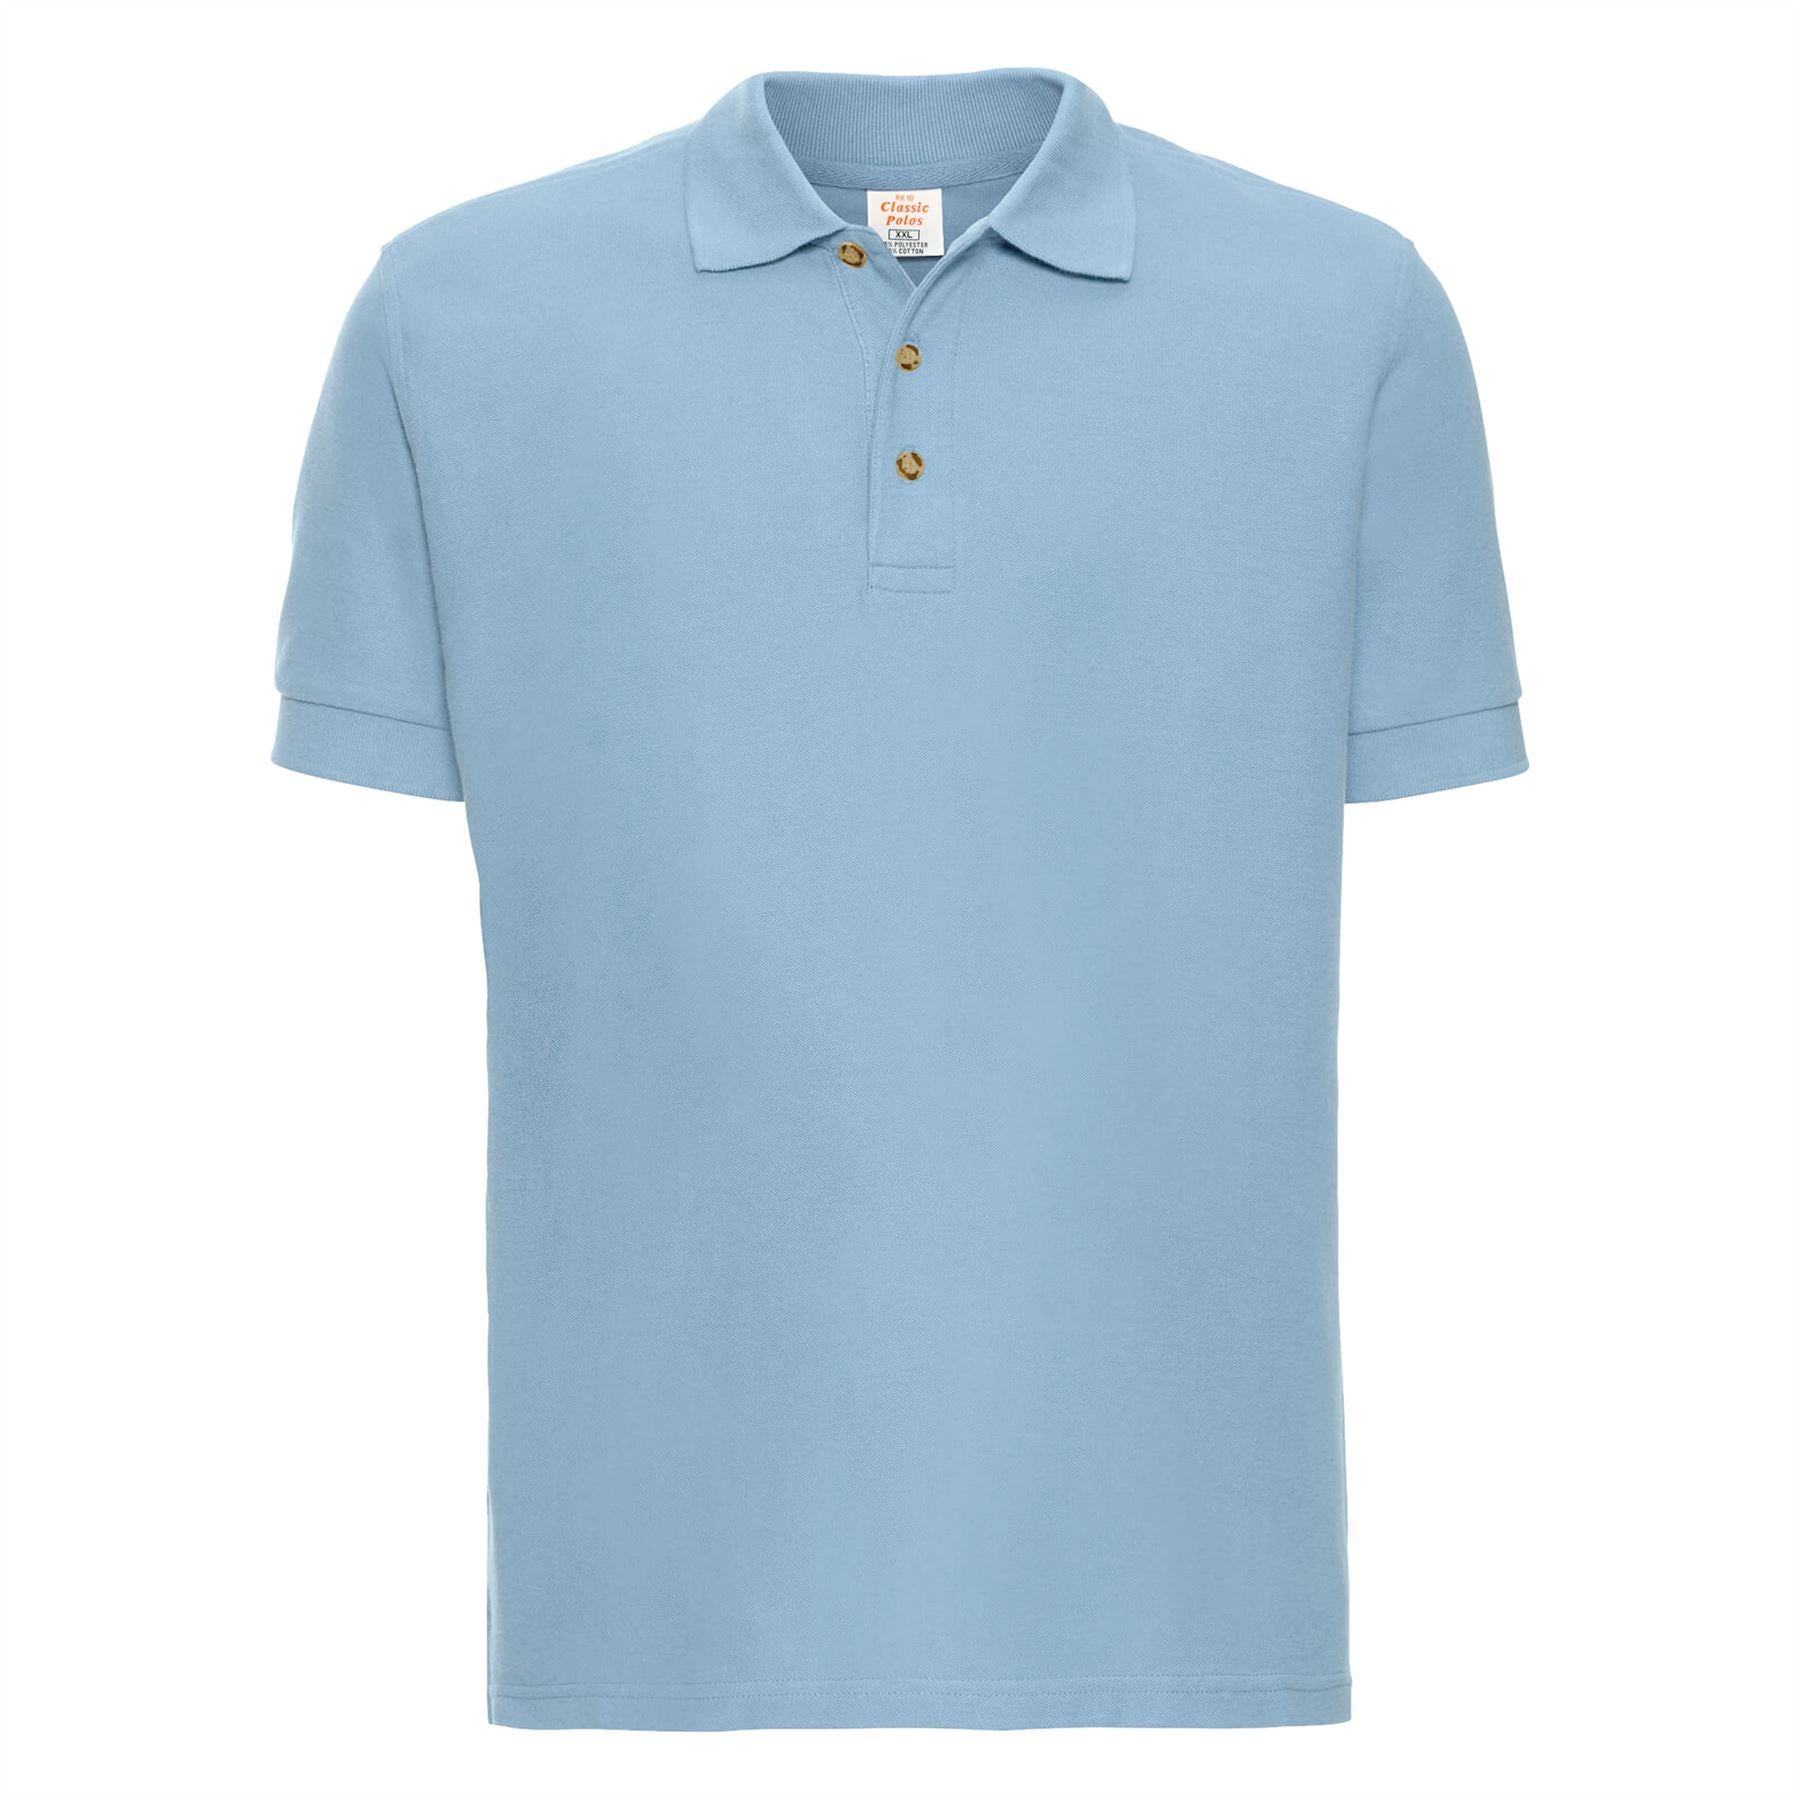 Charcoal Short Sleeve Polo T-Shirt